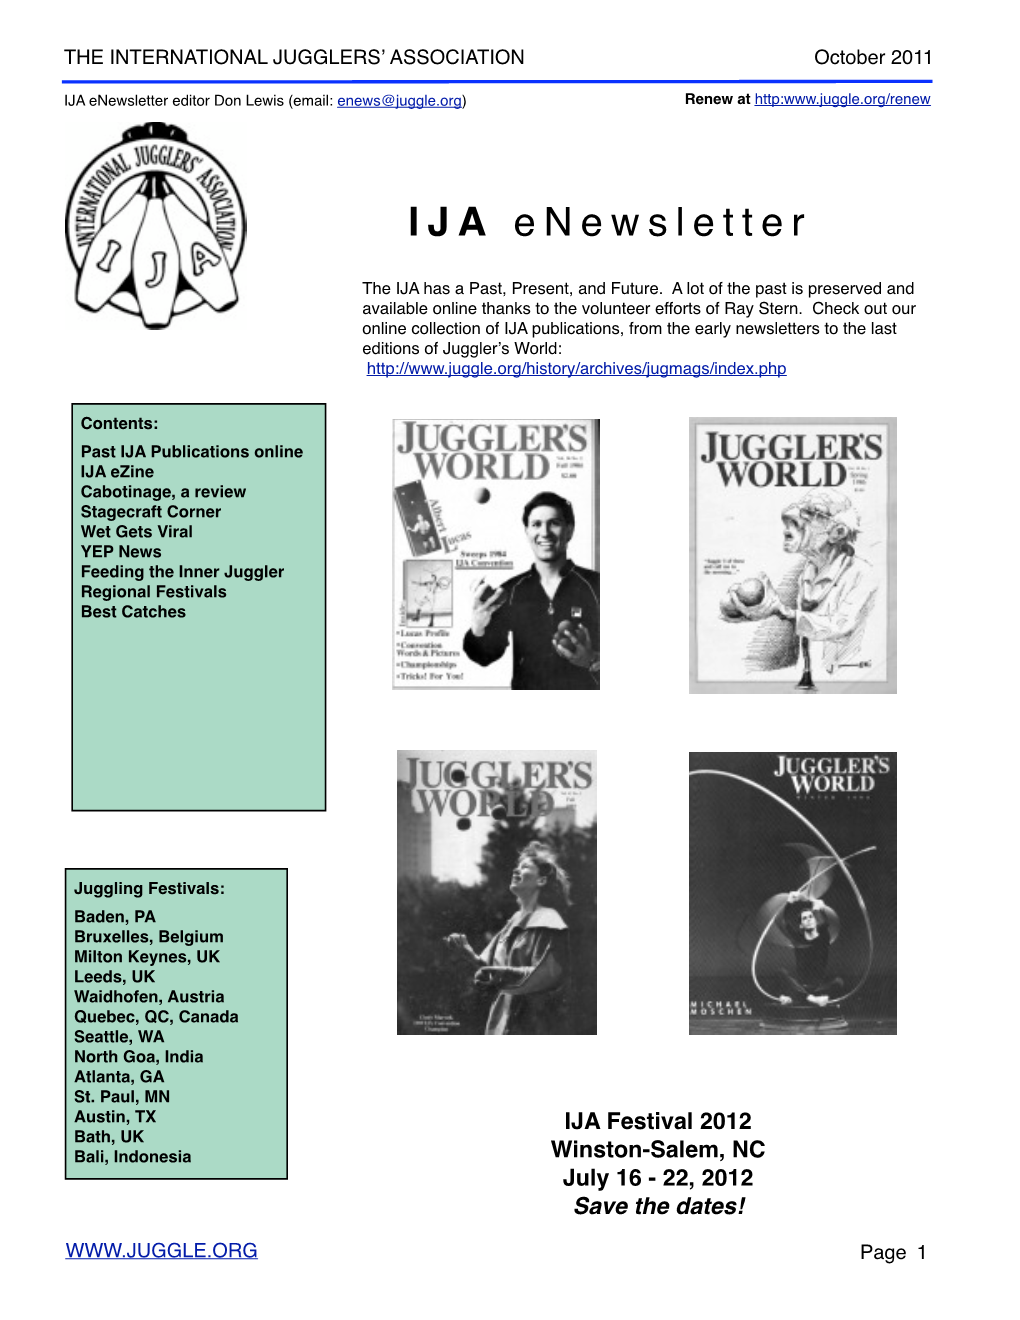 IJA Enewsletter Editor Don Lewis (Email: Enews@Juggle.Org) Renew at Http